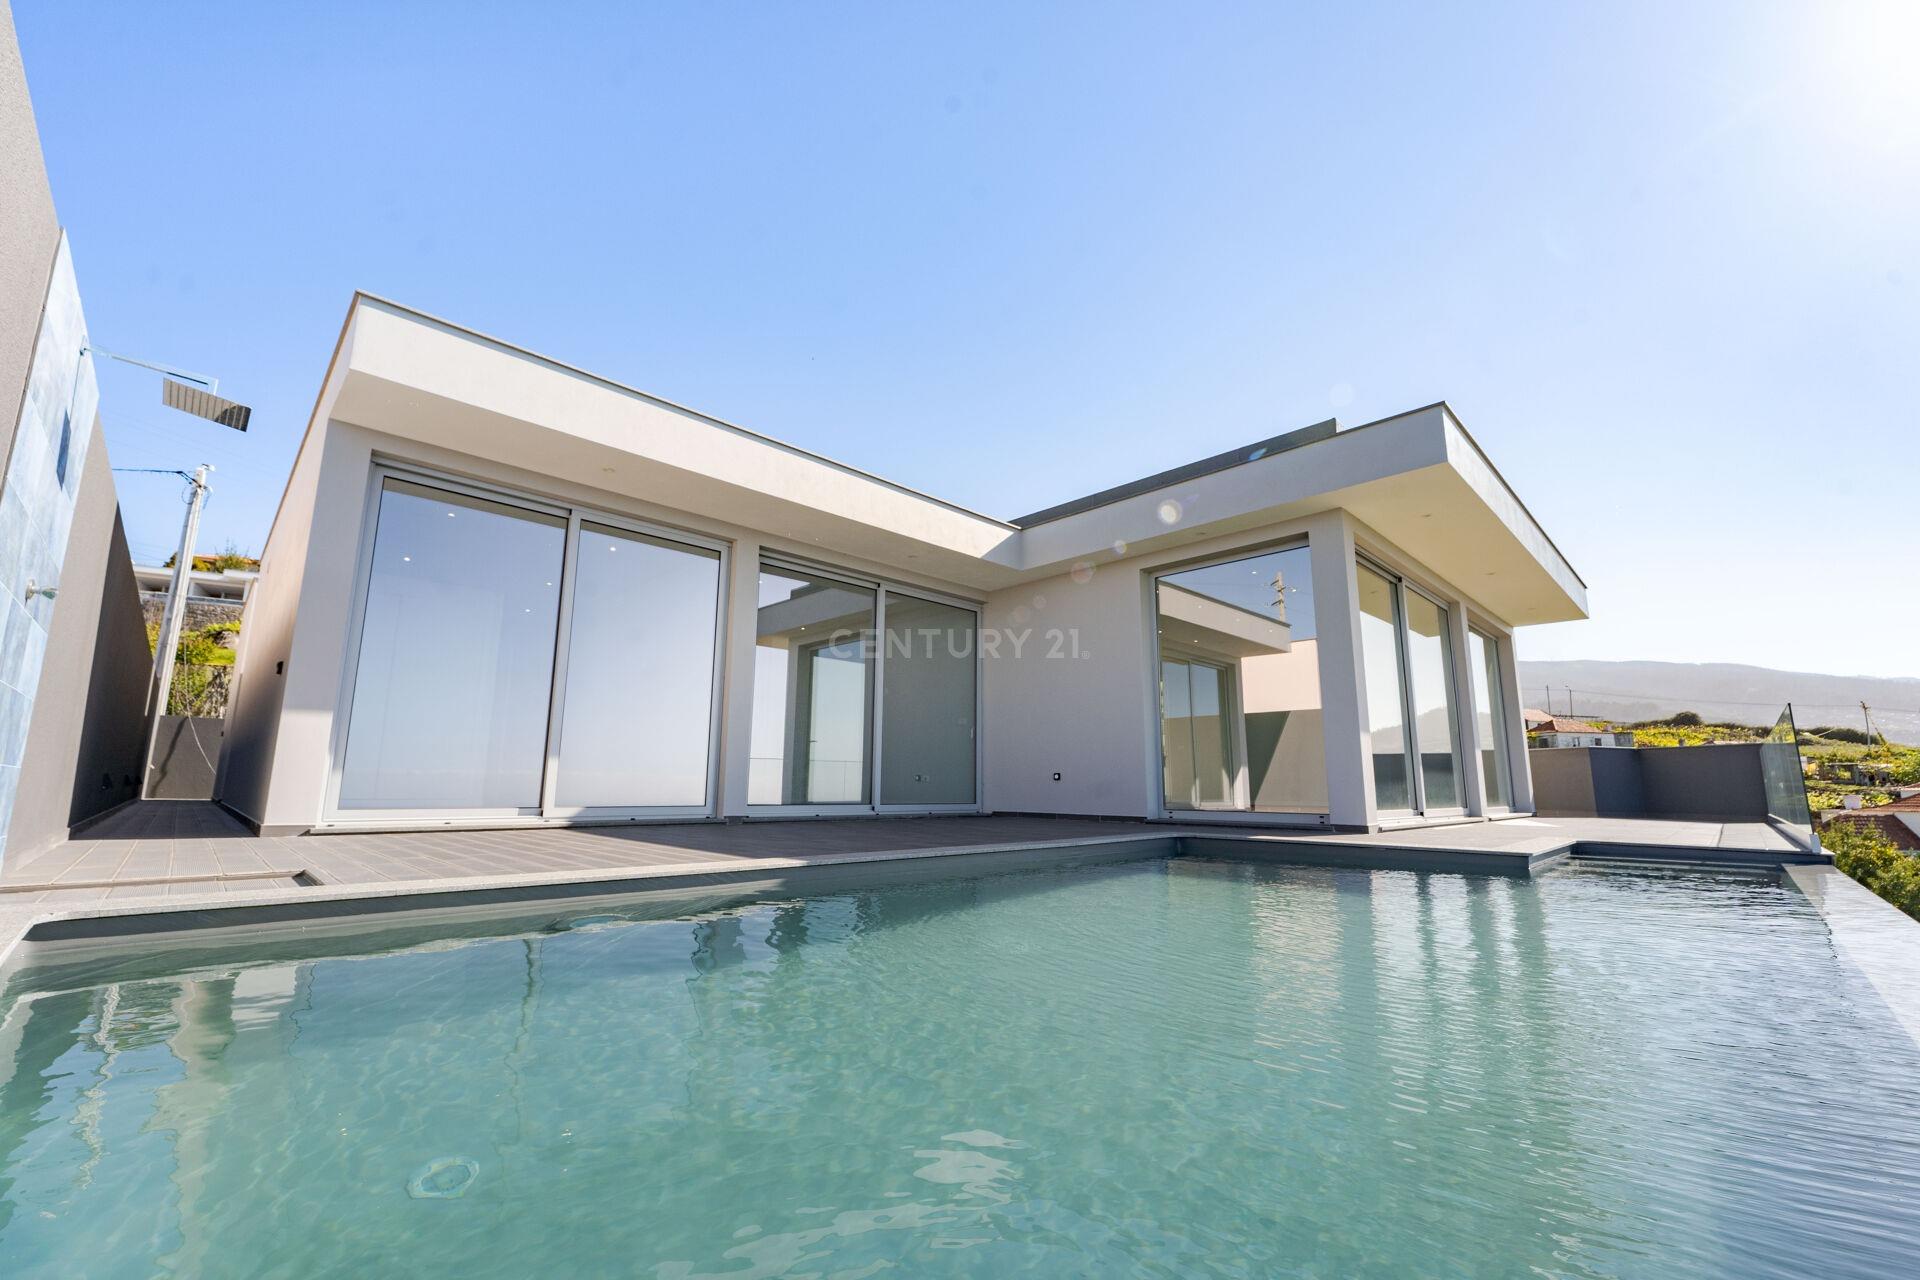 New Three Bedroom Single Storey House - Pool and Stunning Sea View - Calheta